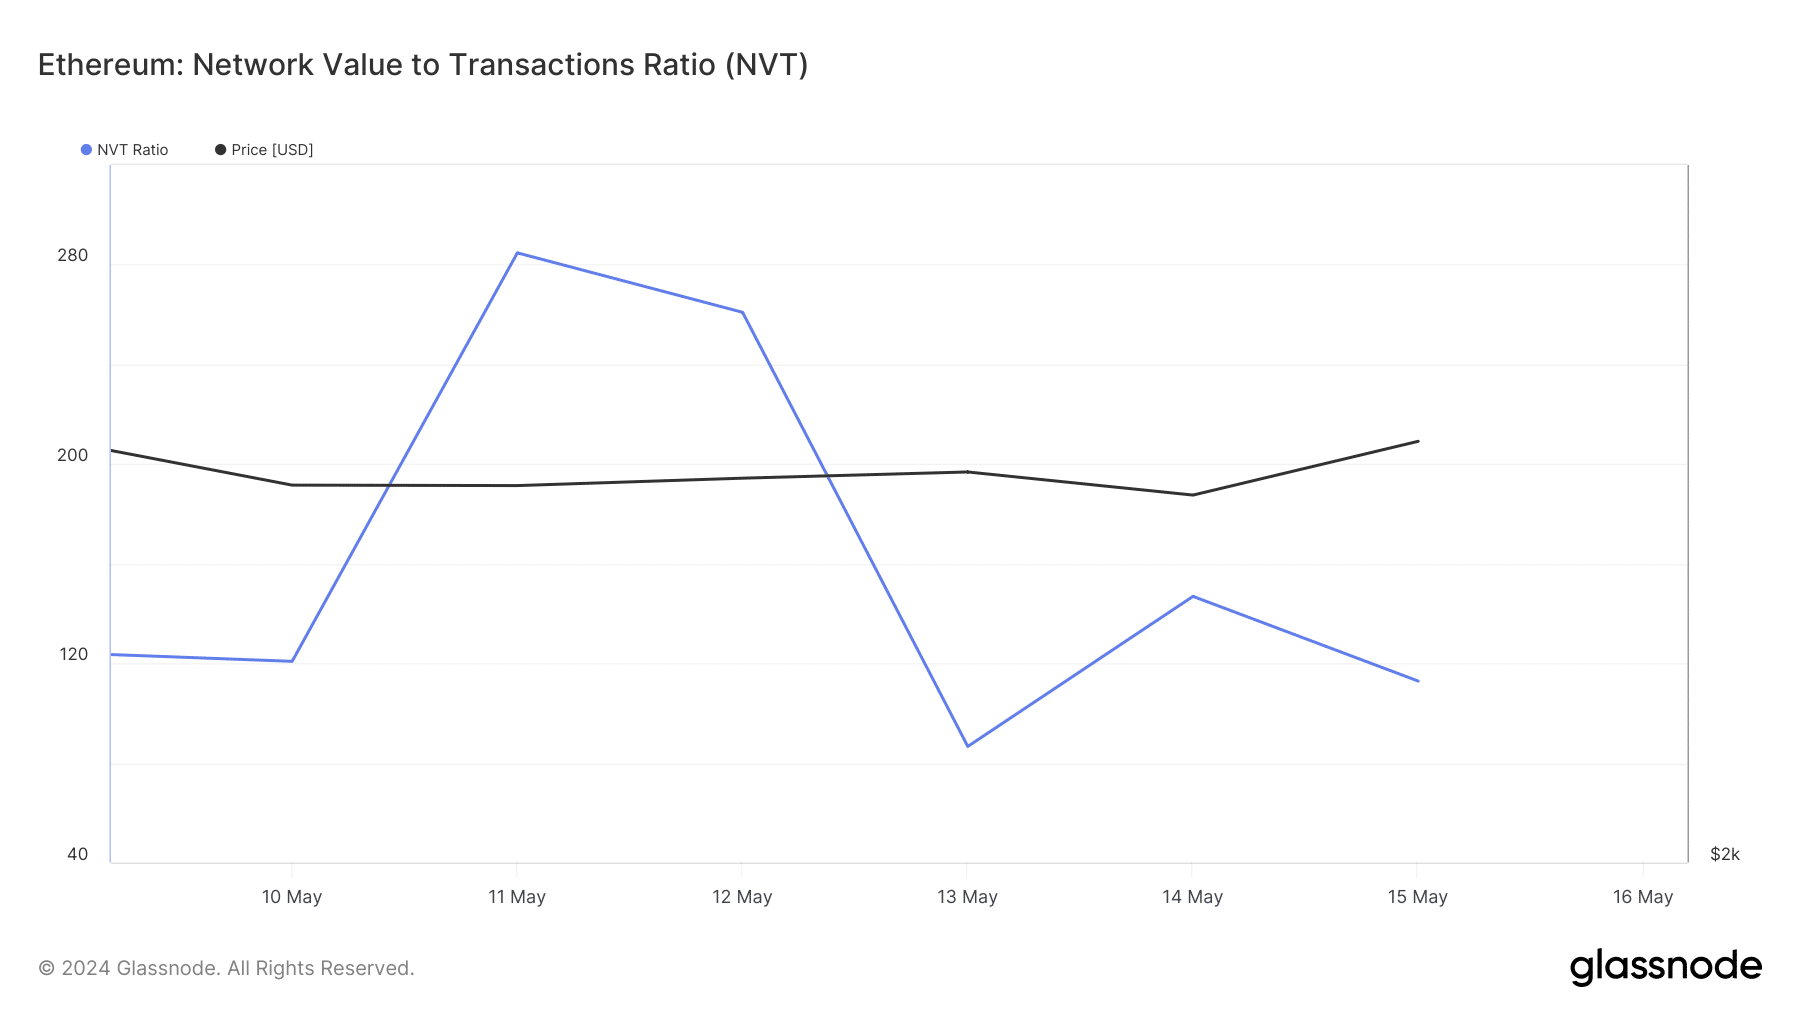 ETH's NVT ratio dropped